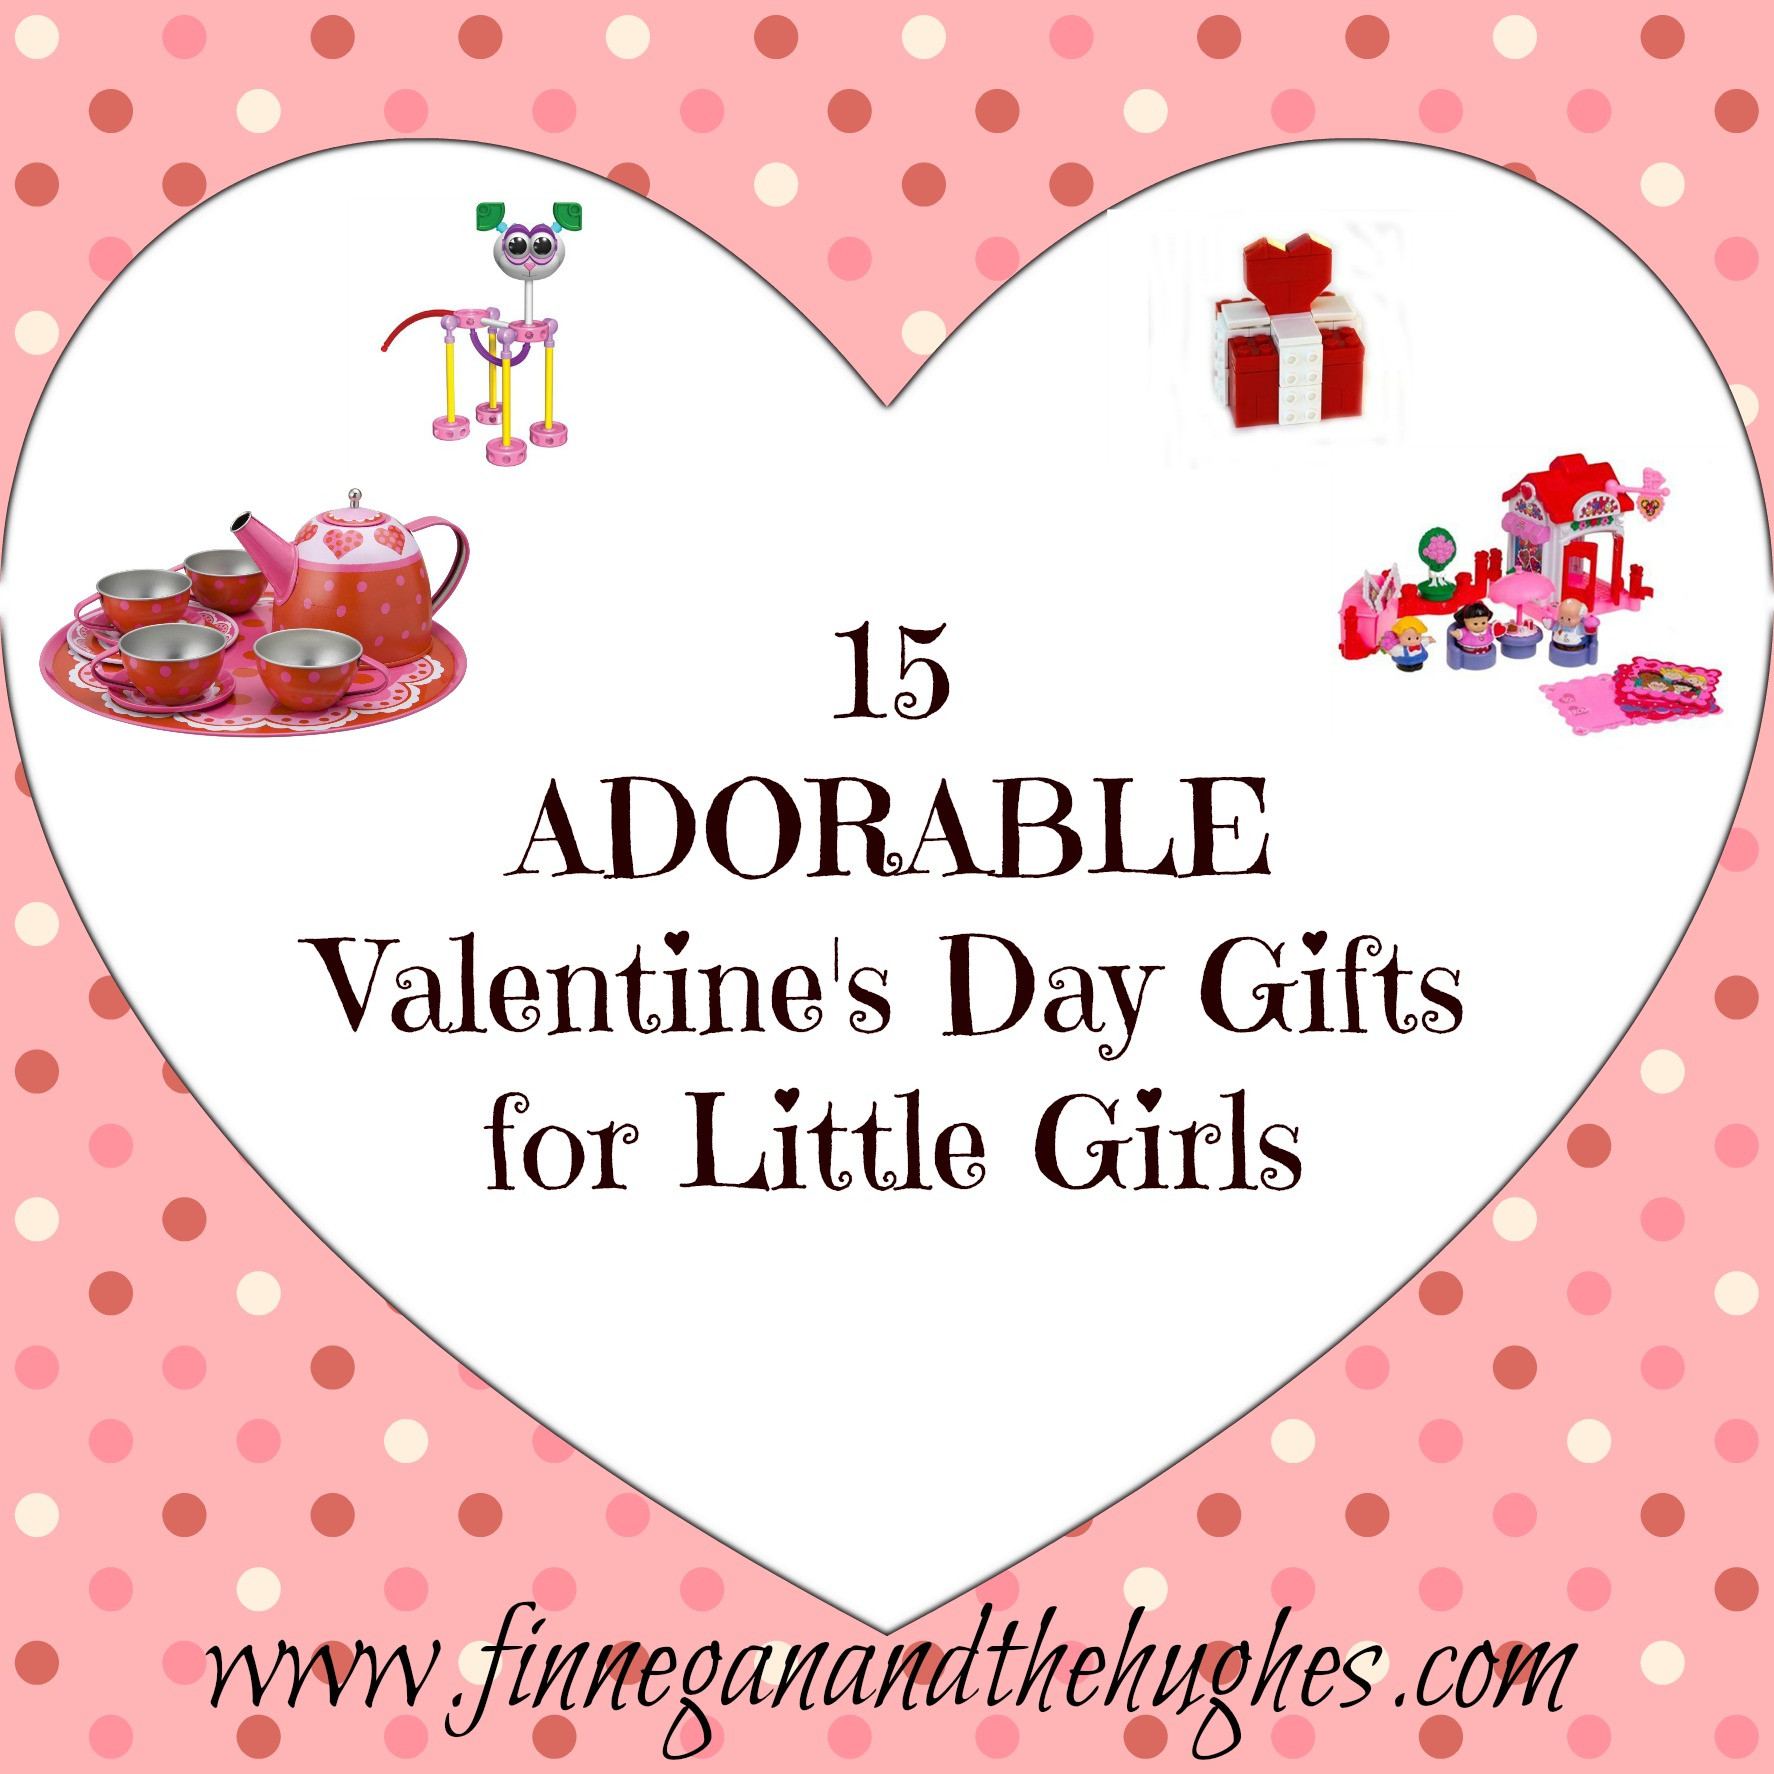 Gift Ideas For Little Girls
 15 Adorable Valentine s Day Gift Ideas for Little Girls